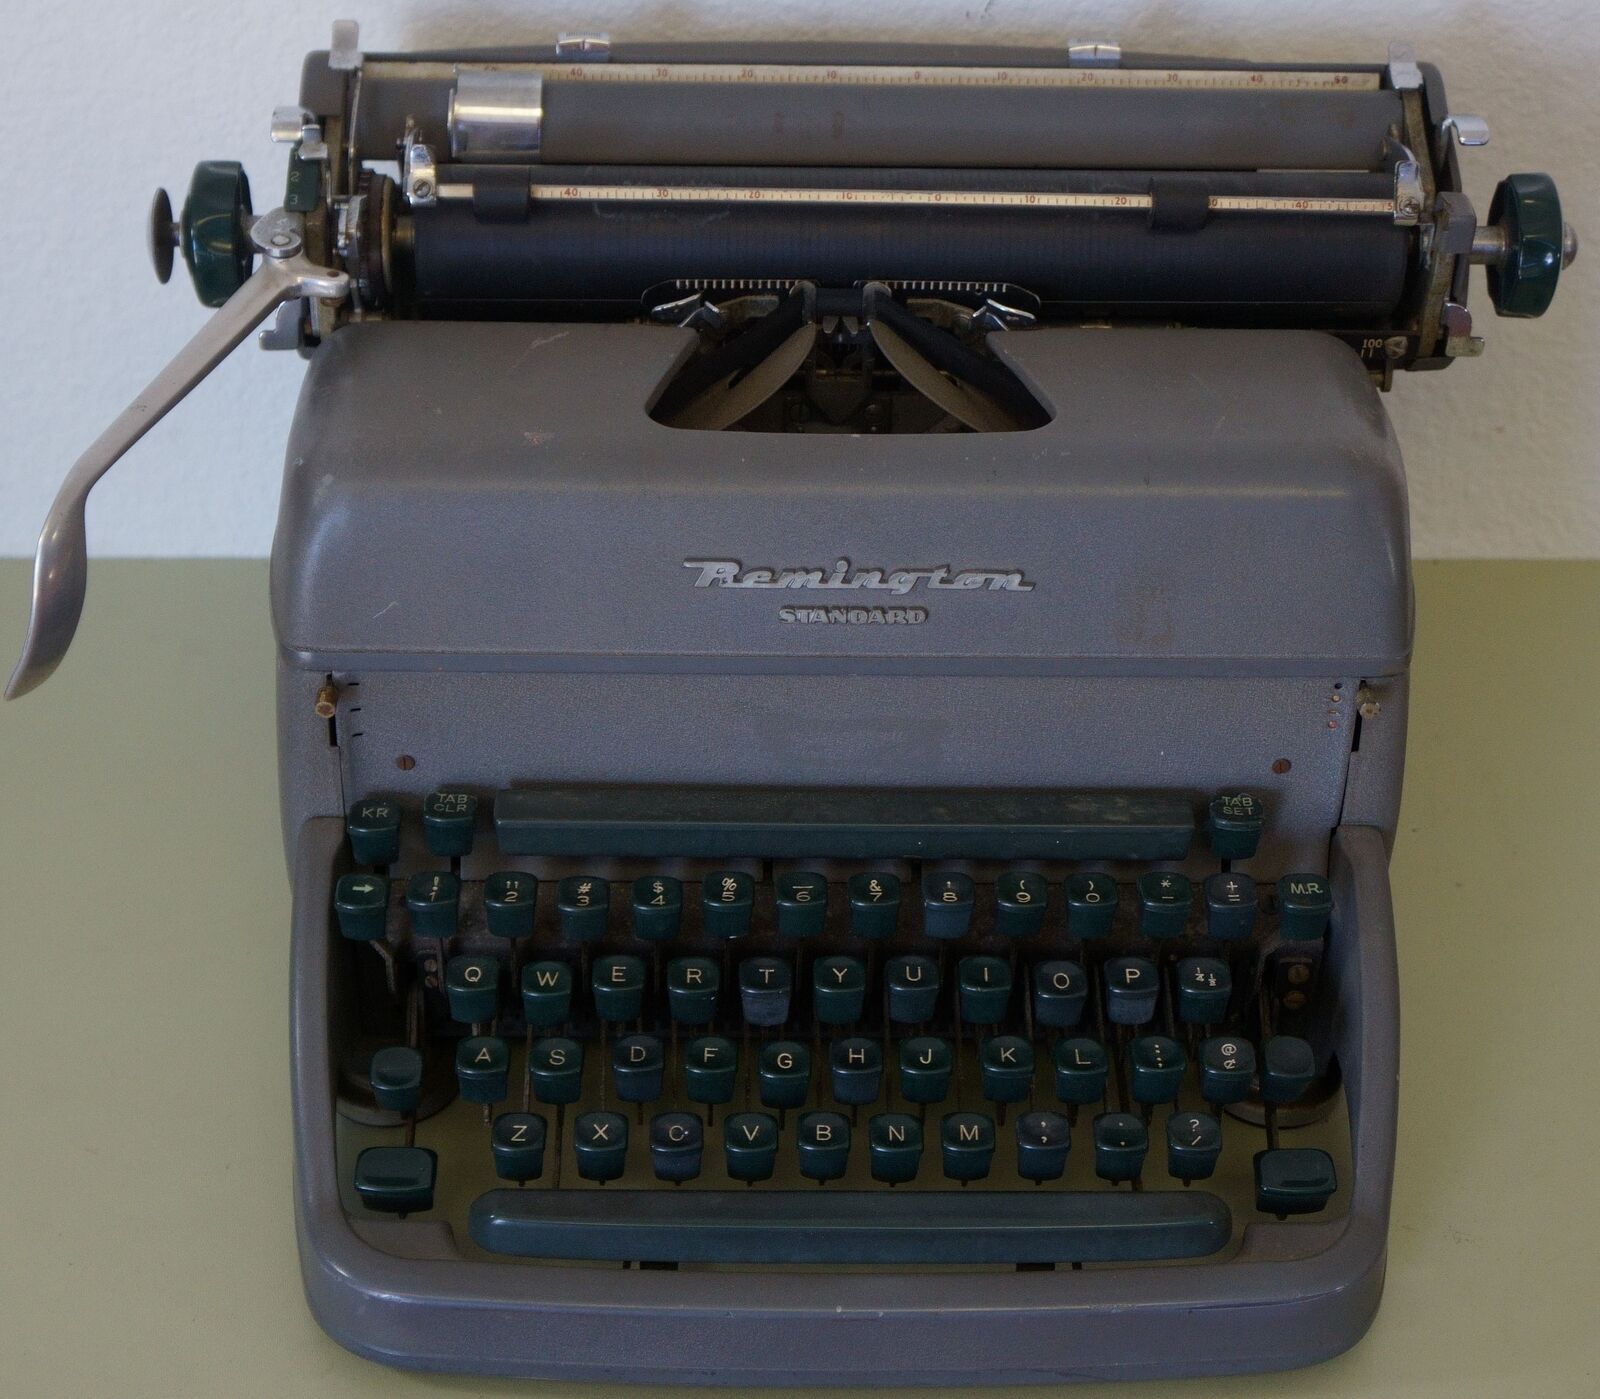 Remington Standard Typewriter - Tested Fine , runs smooth. 